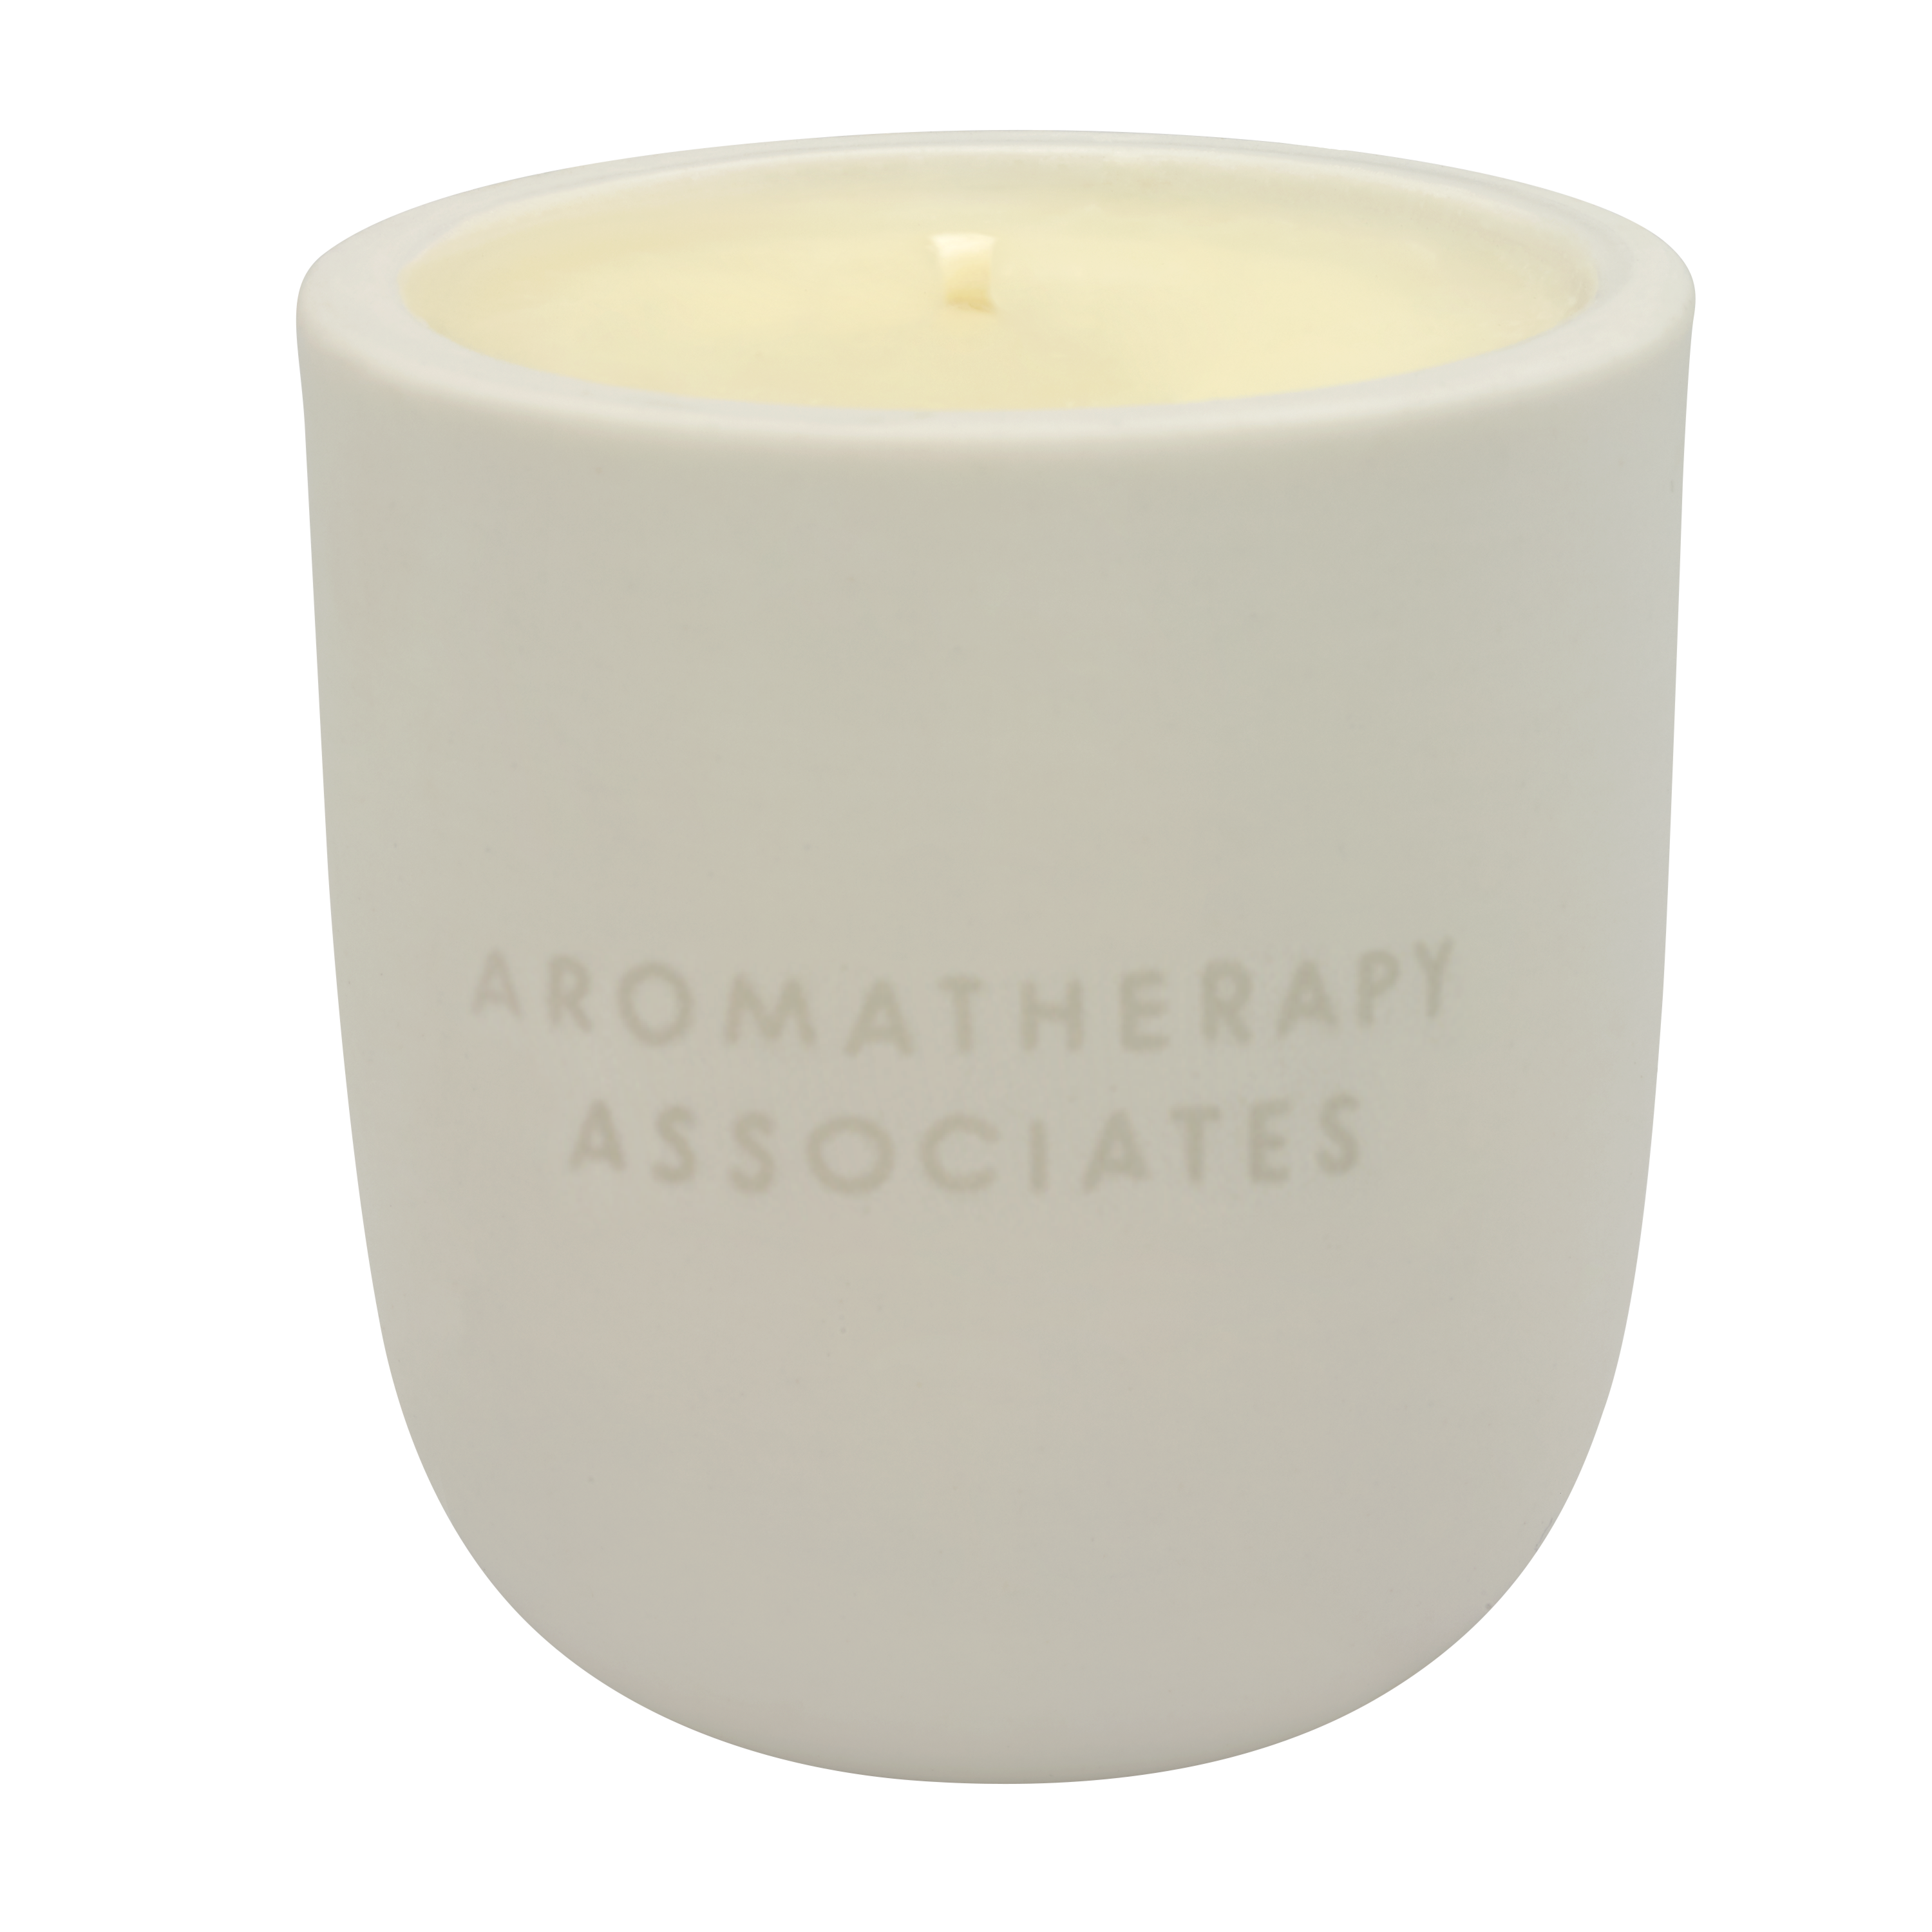 De-Stress Candle 85g Aromatherapy Associates